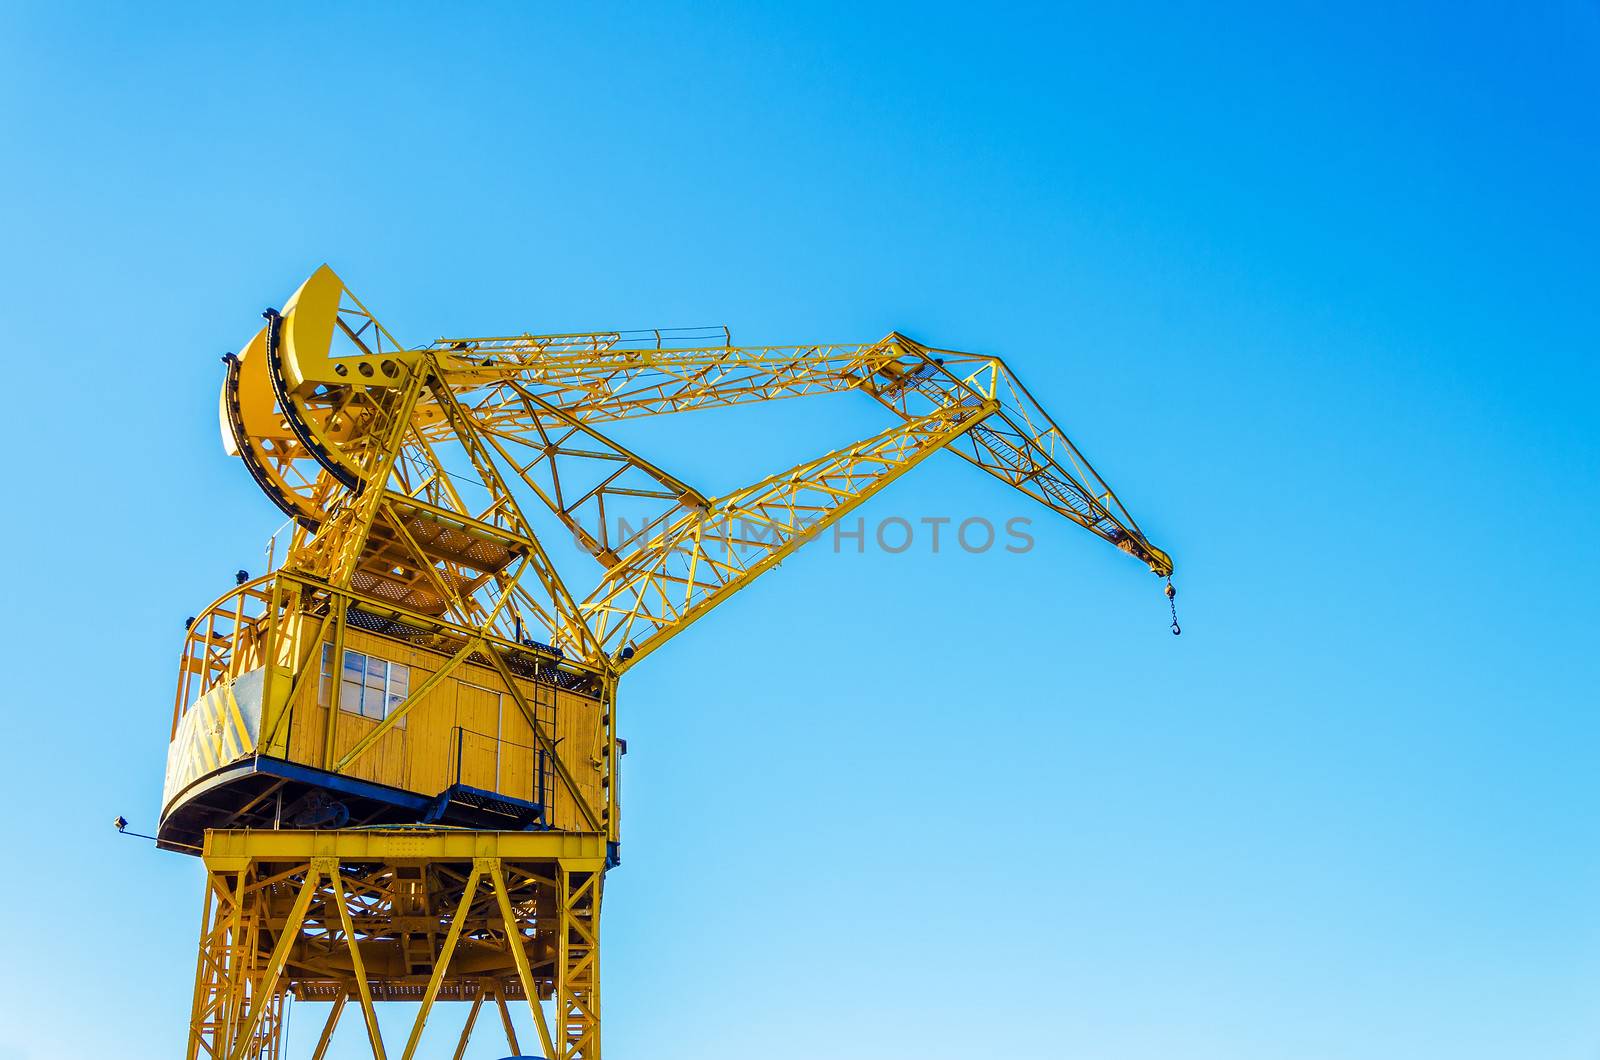 Old Yellow Crane by jkraft5